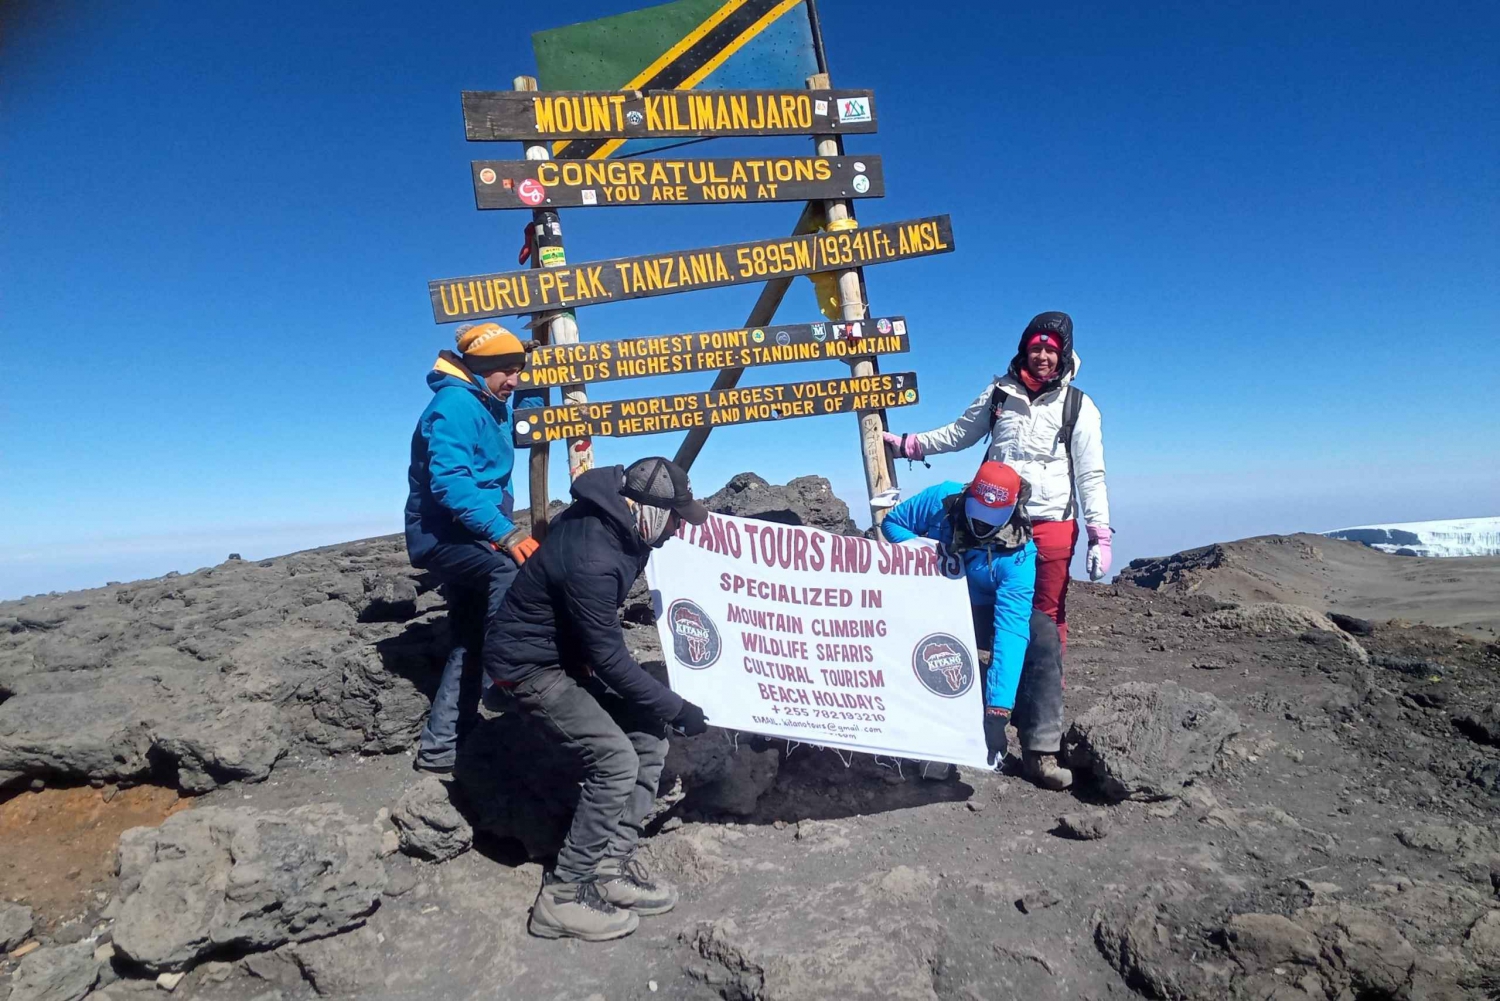 5 day kilimanjaro joining group via marangu route